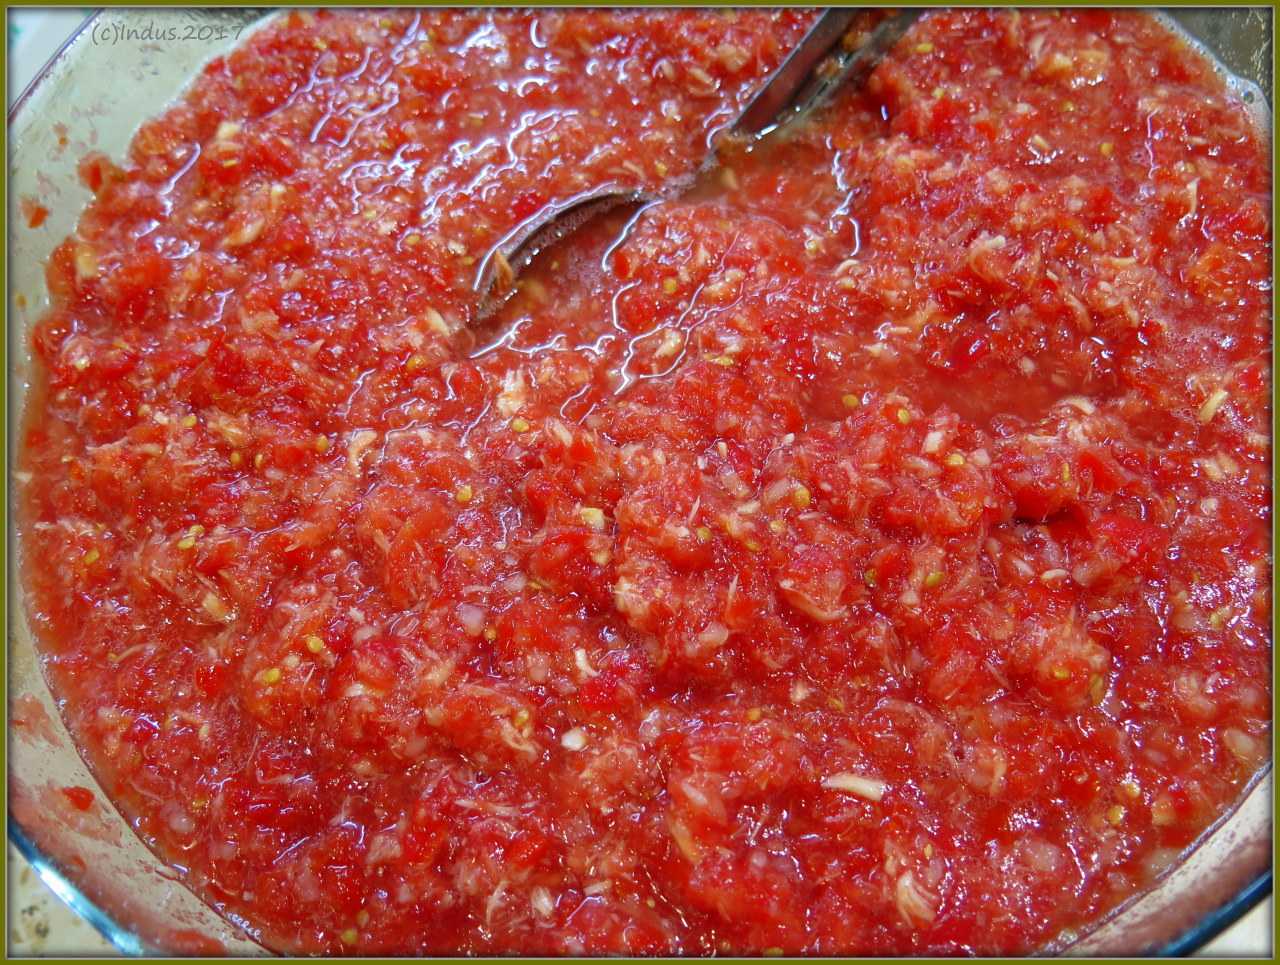 Хреновина — рецепты приготовления хренодёра из помидор на зиму